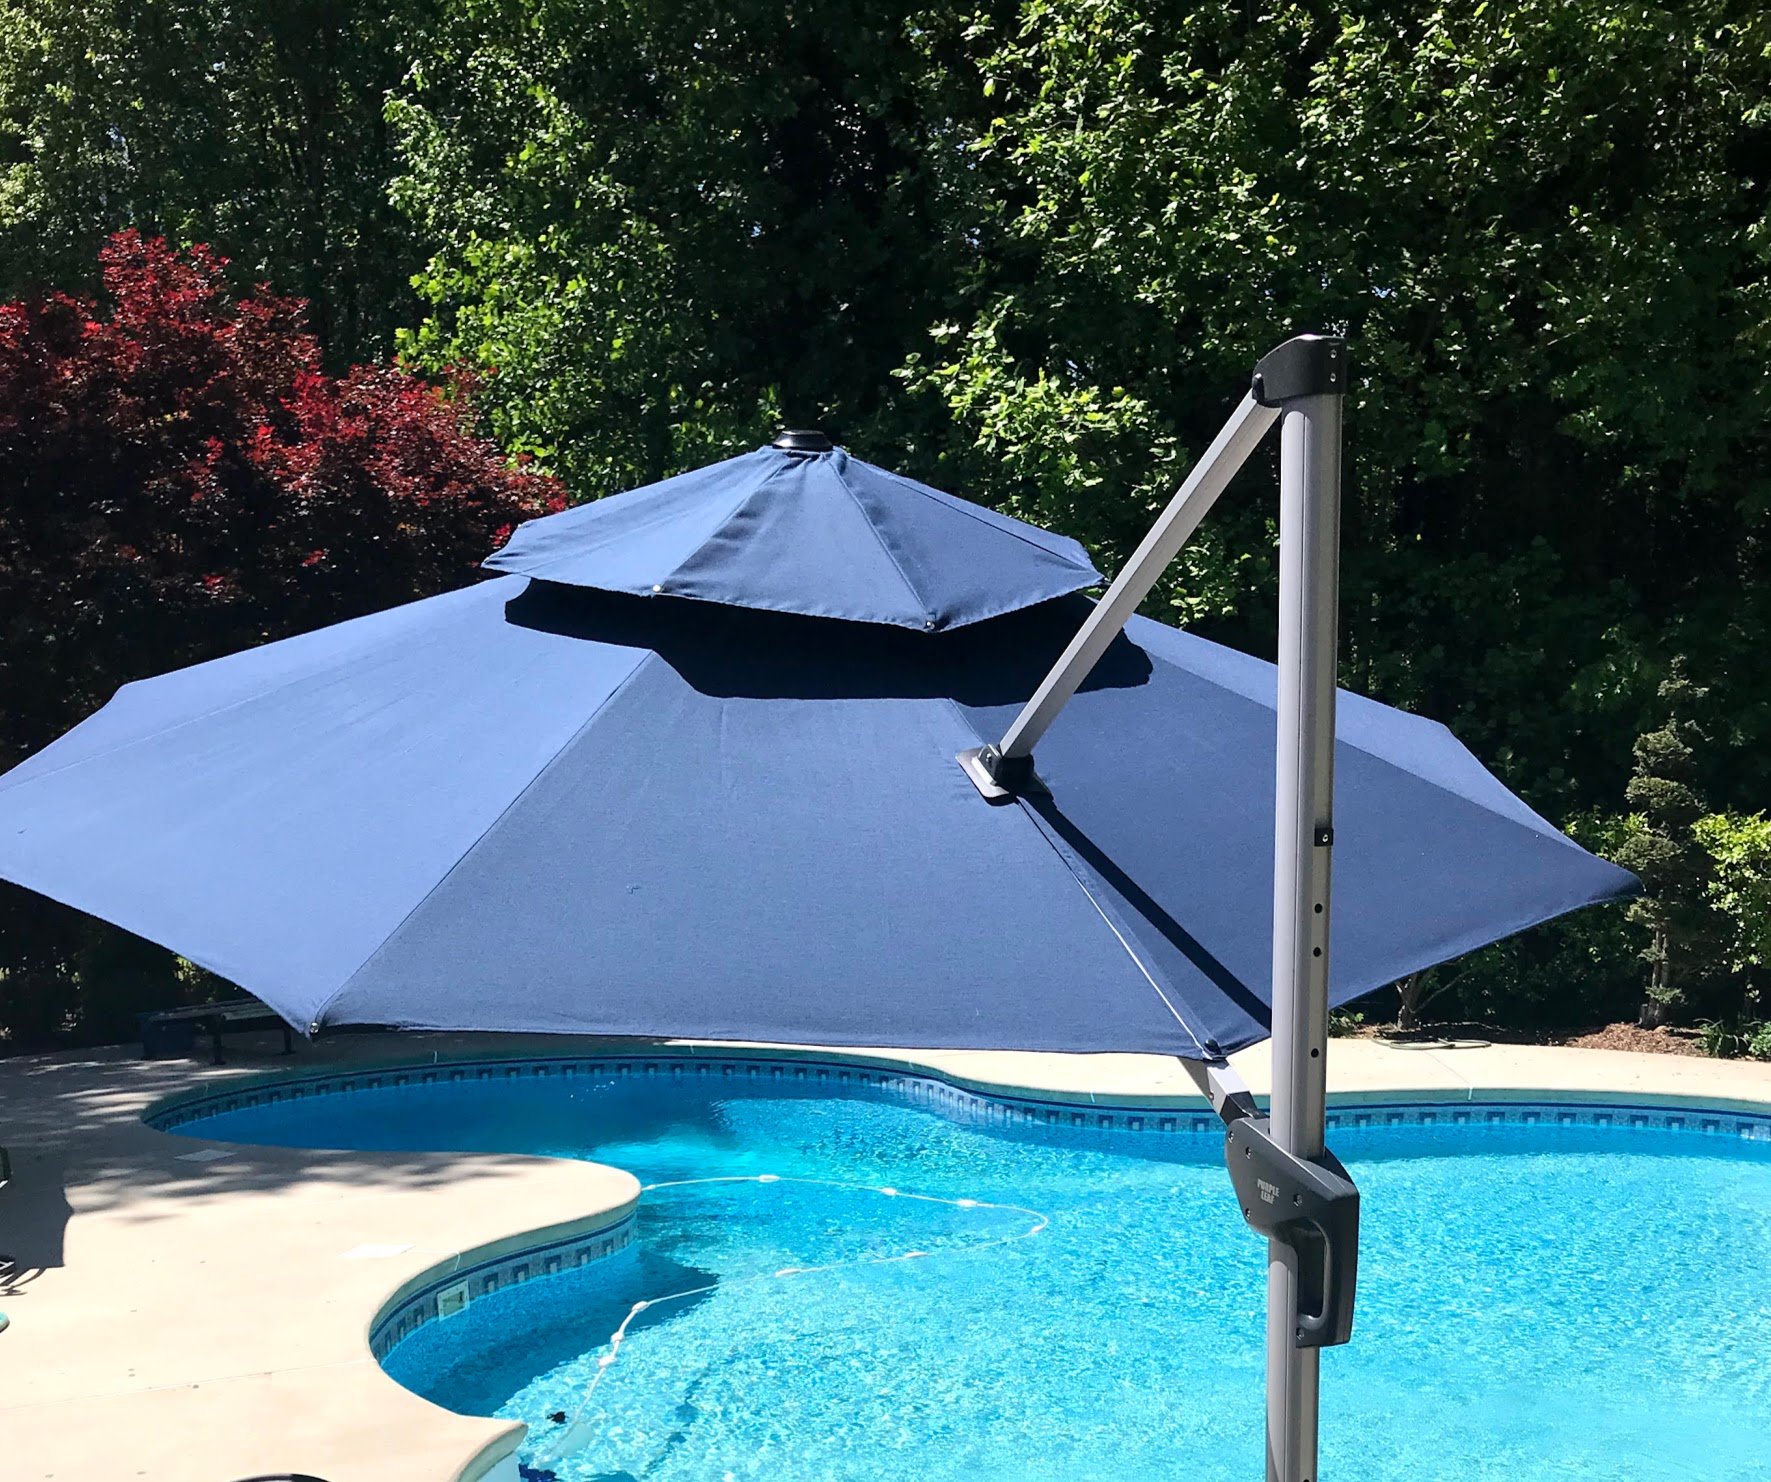 Sunbrella umbrellas